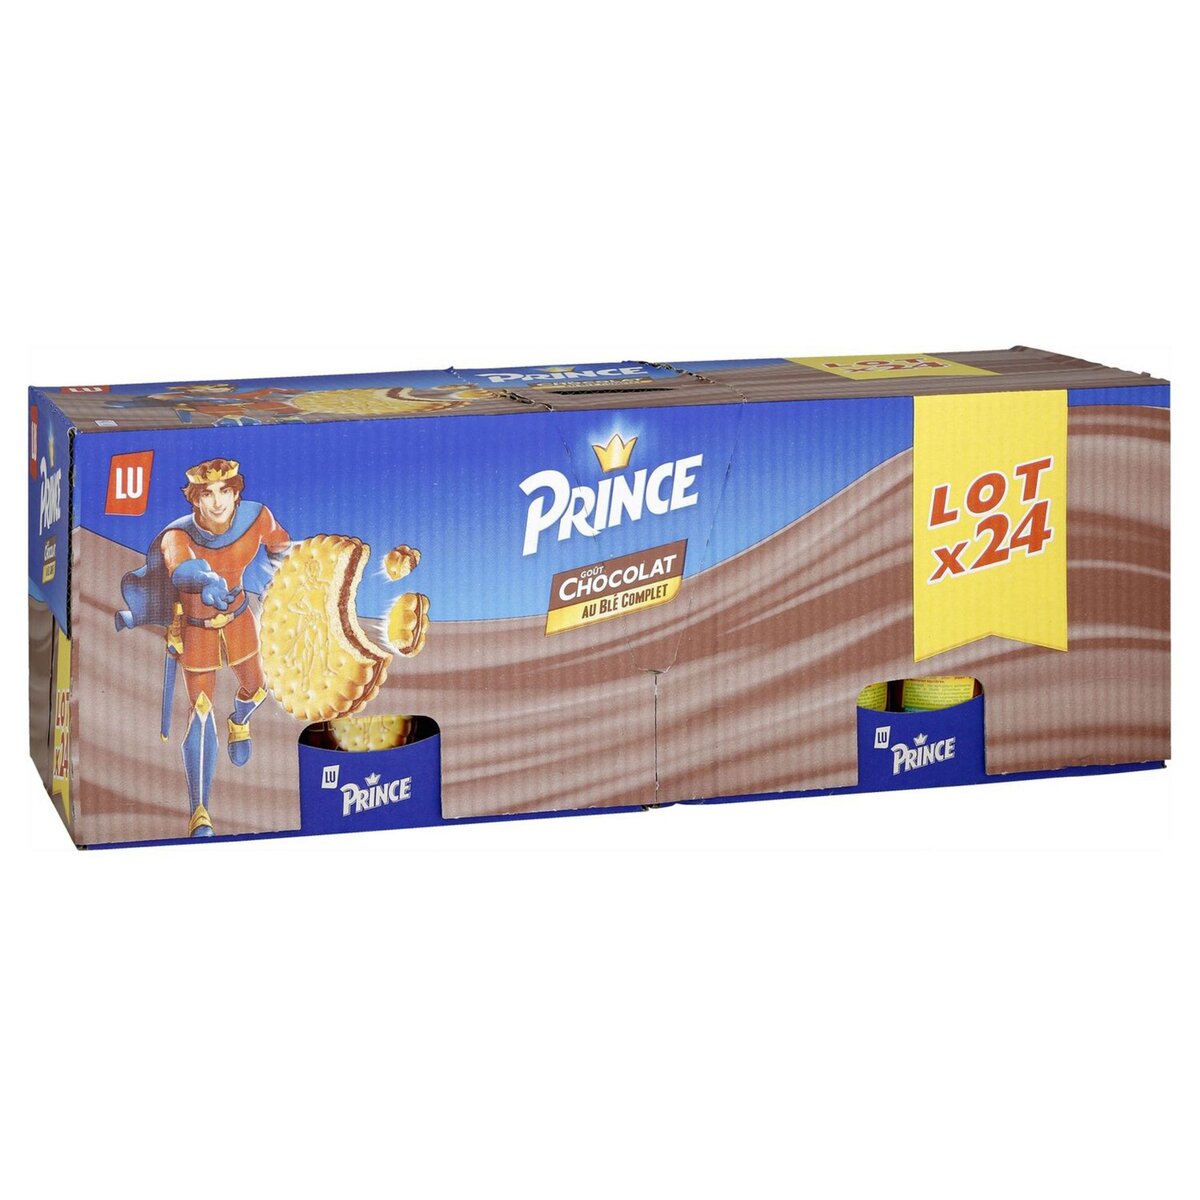 PRINCE Prince chocolat 24x300g 24 paquets 24x300g